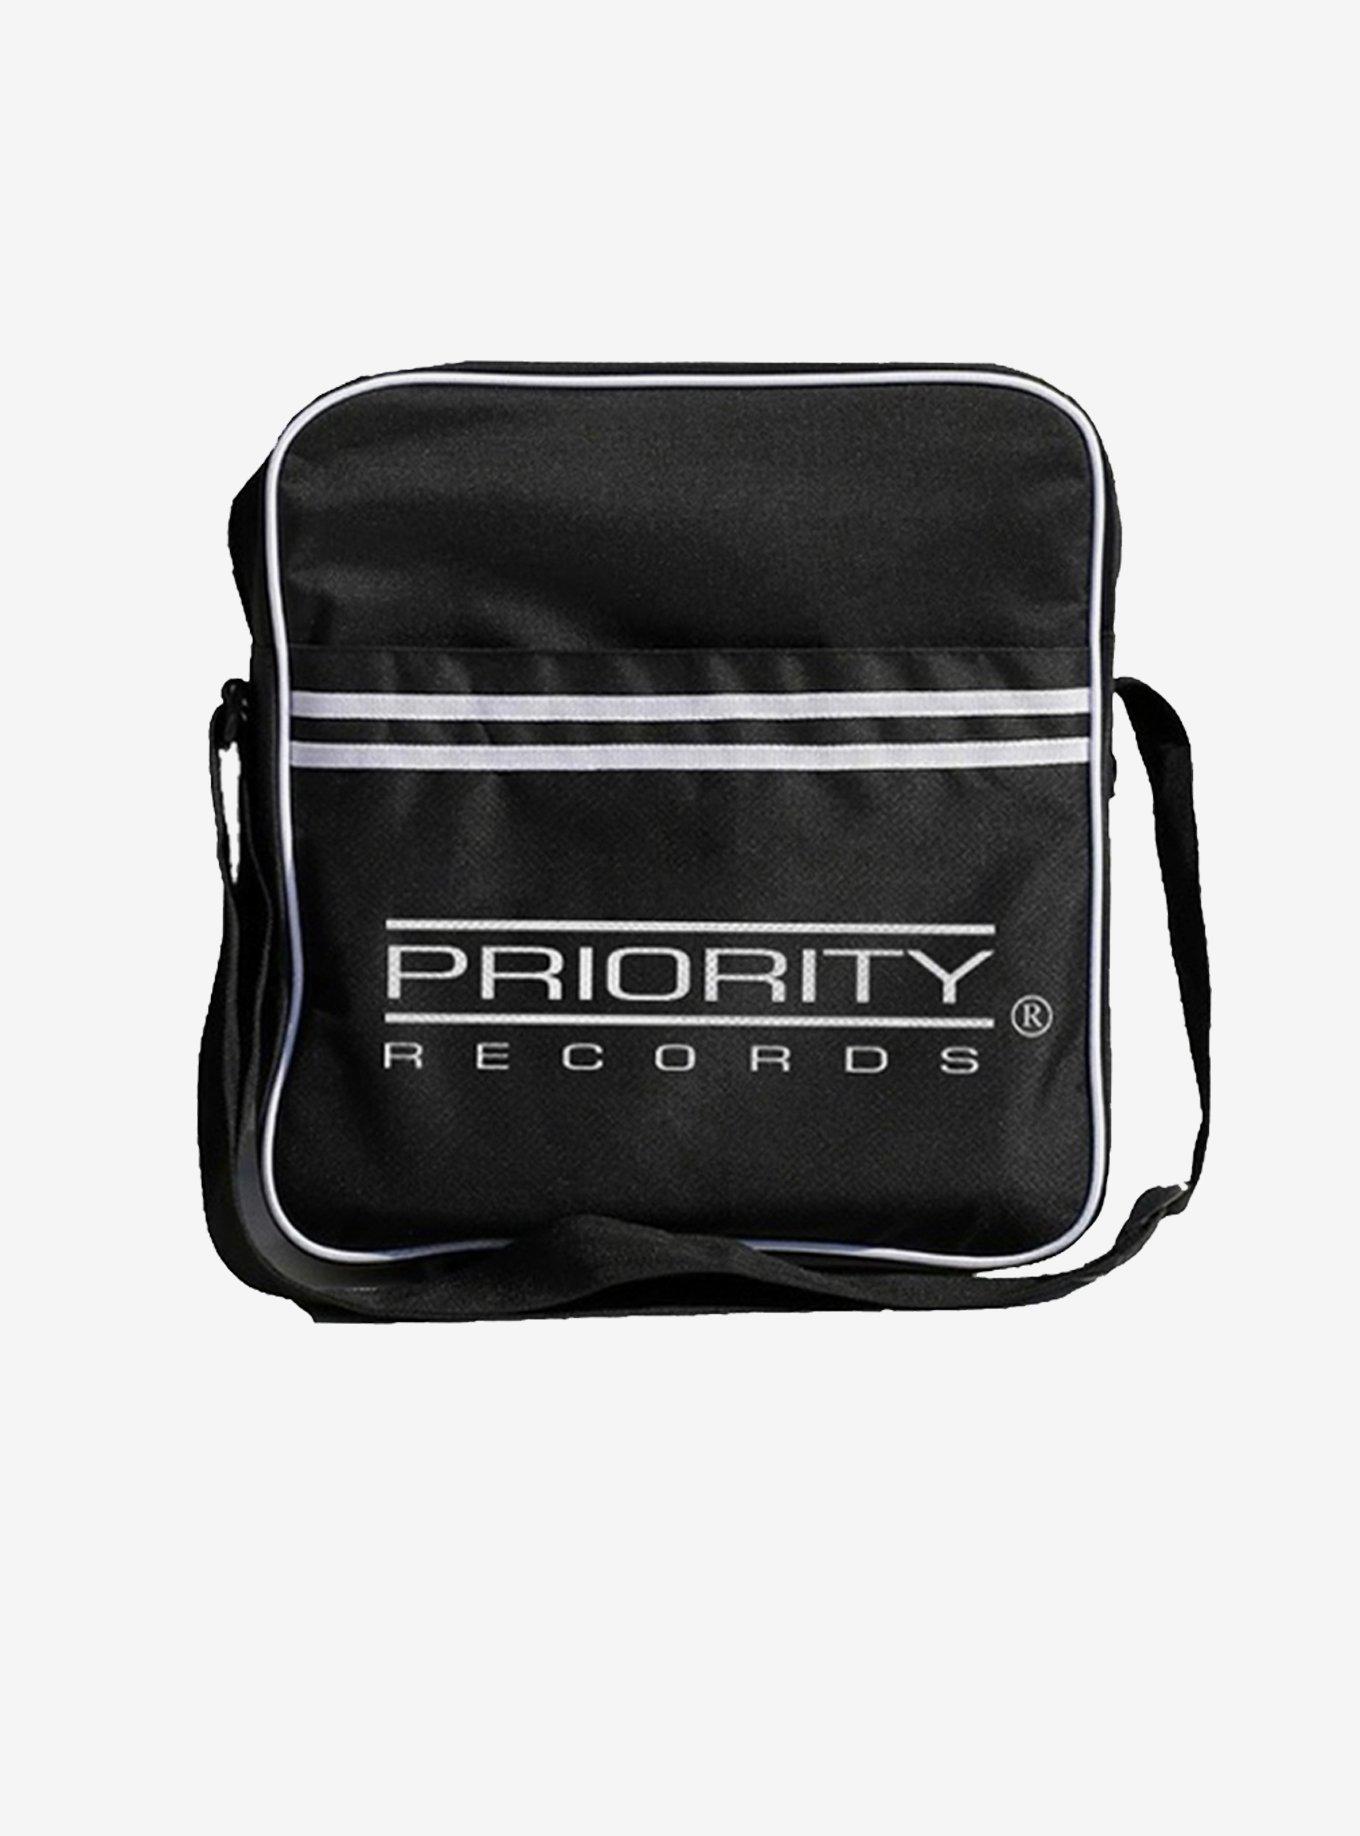 Priority Records Zip Top Vinyl Record Bag